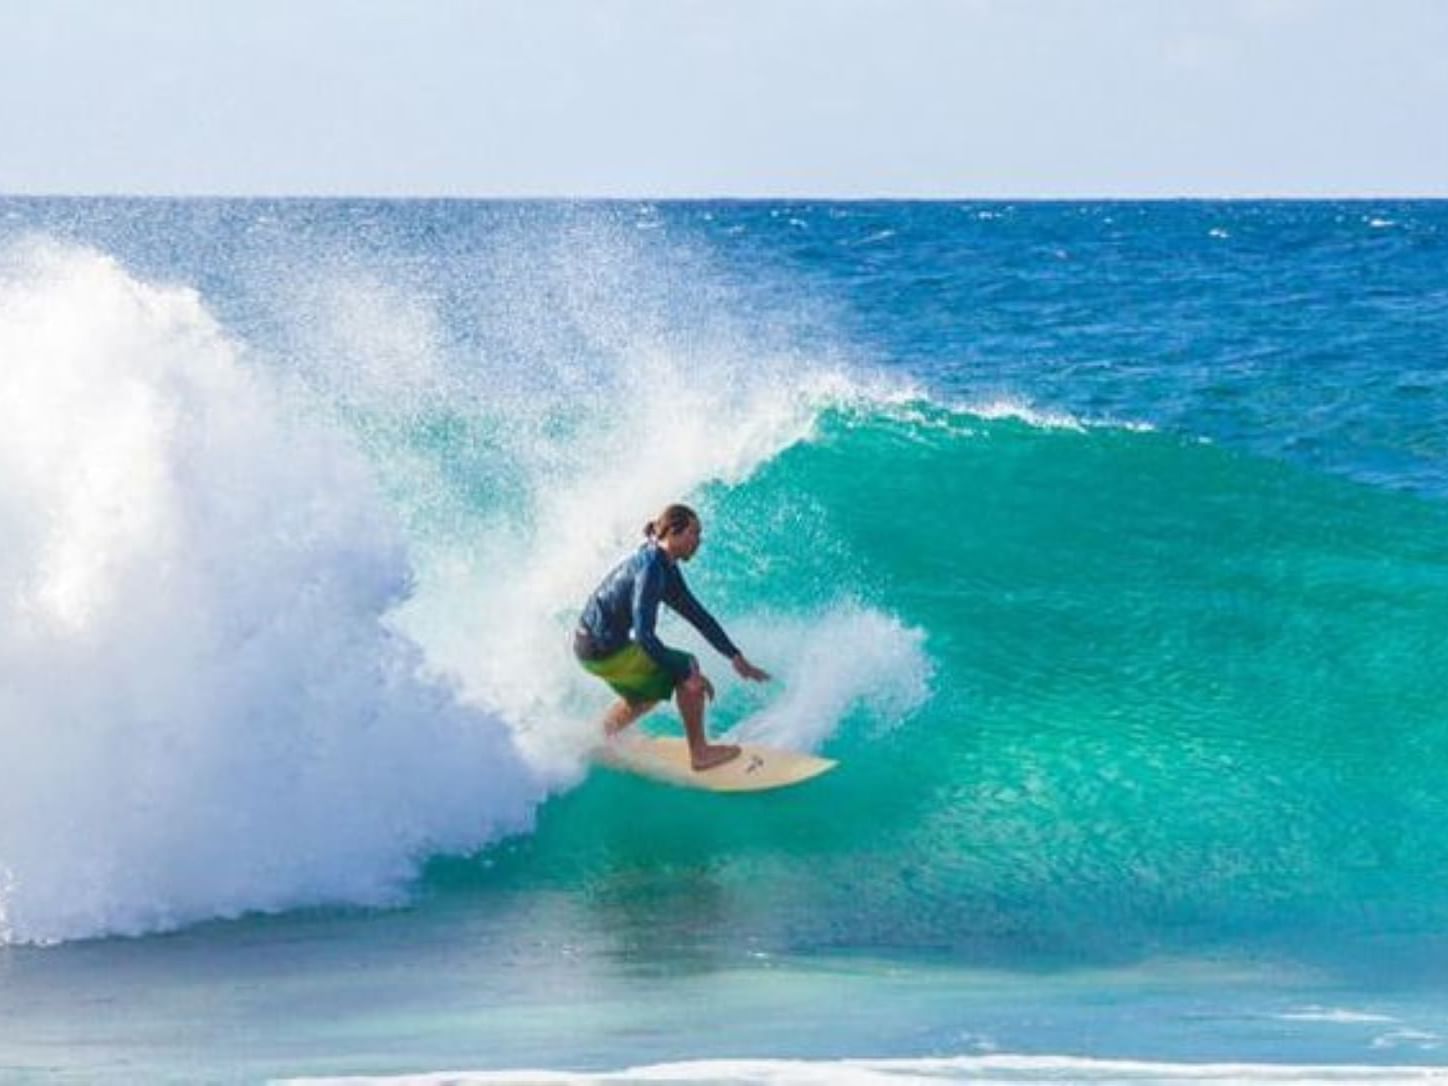 A surfer surfing on the ocean waves near Stay Hotel Waikiki